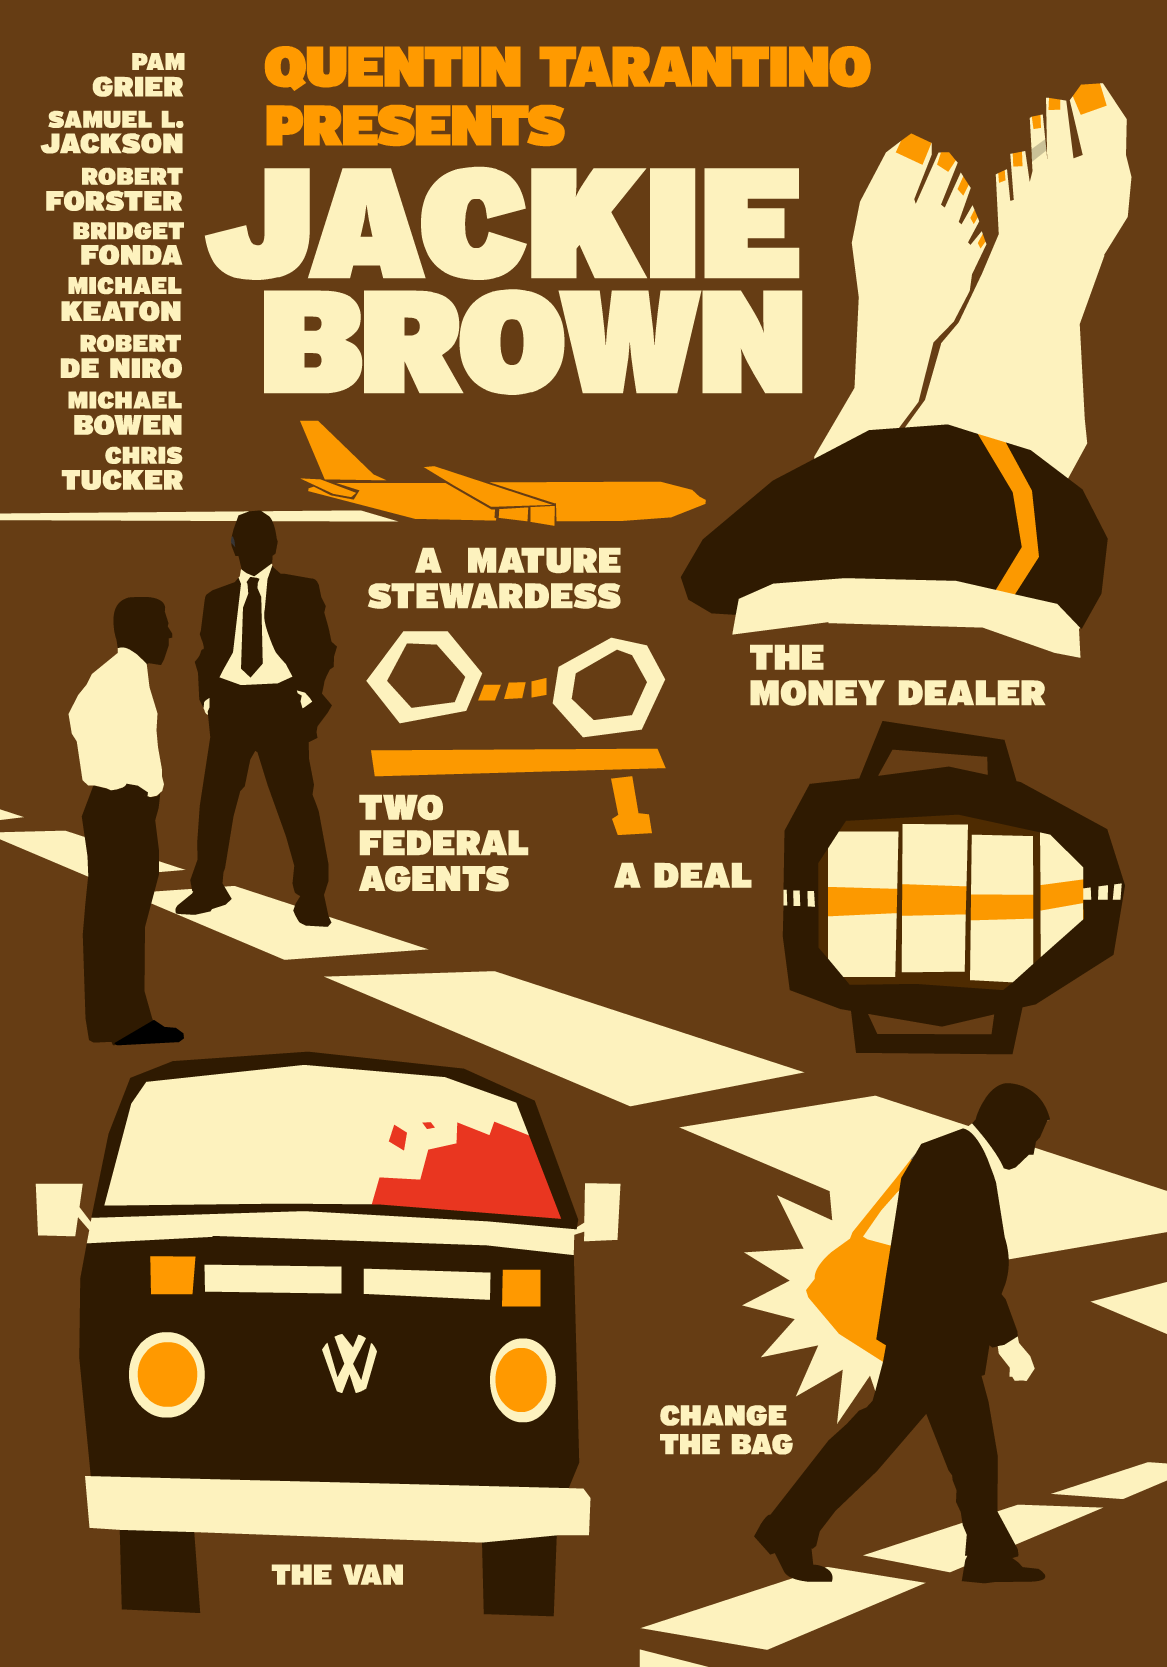 Quentin Tarantino reservoir dogs kill bill 1 ilustration poster